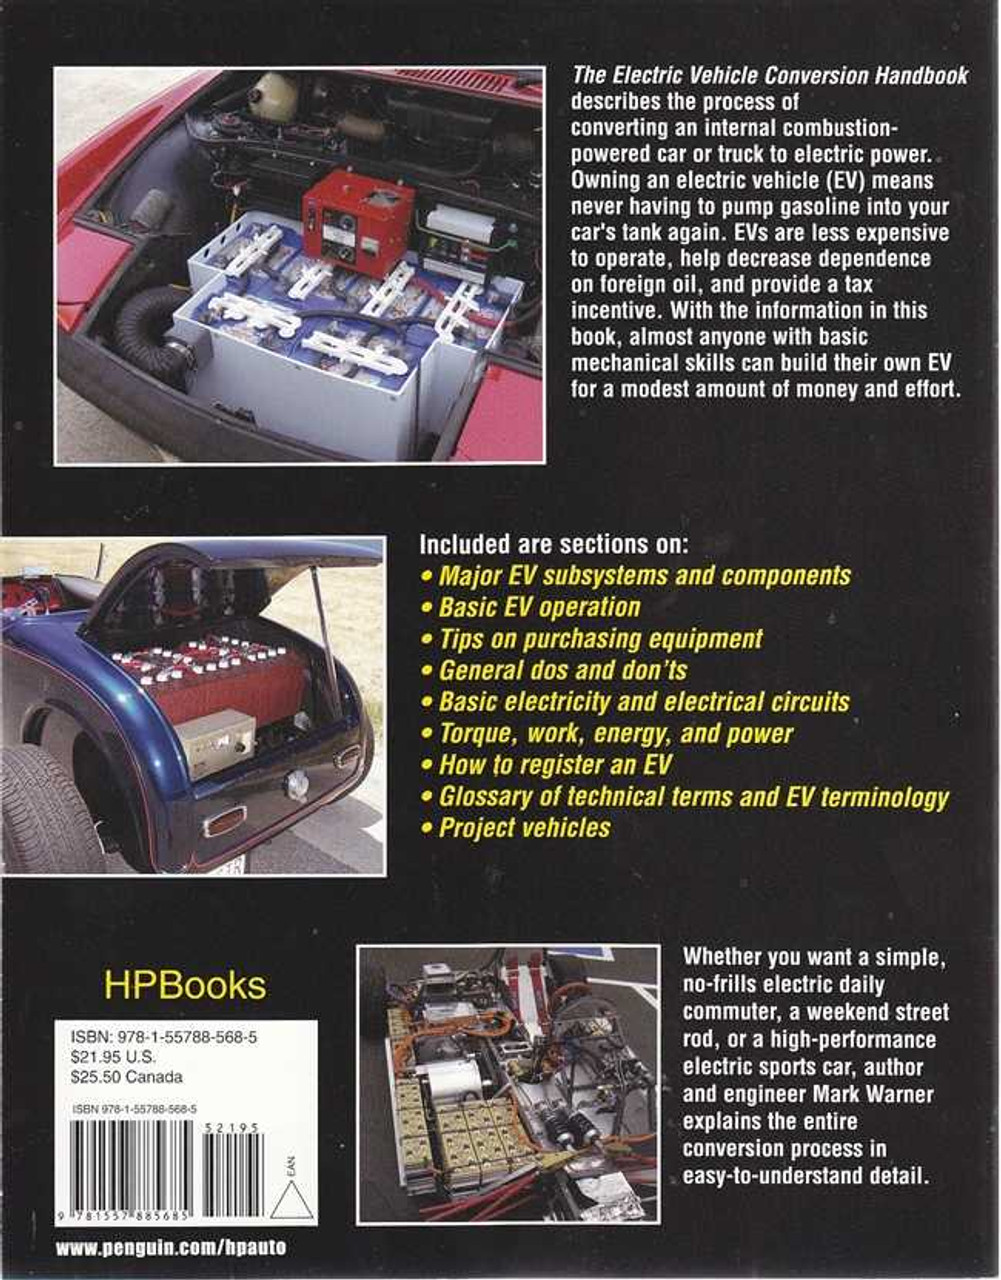 The Electric Vehicle Conversion Handbook